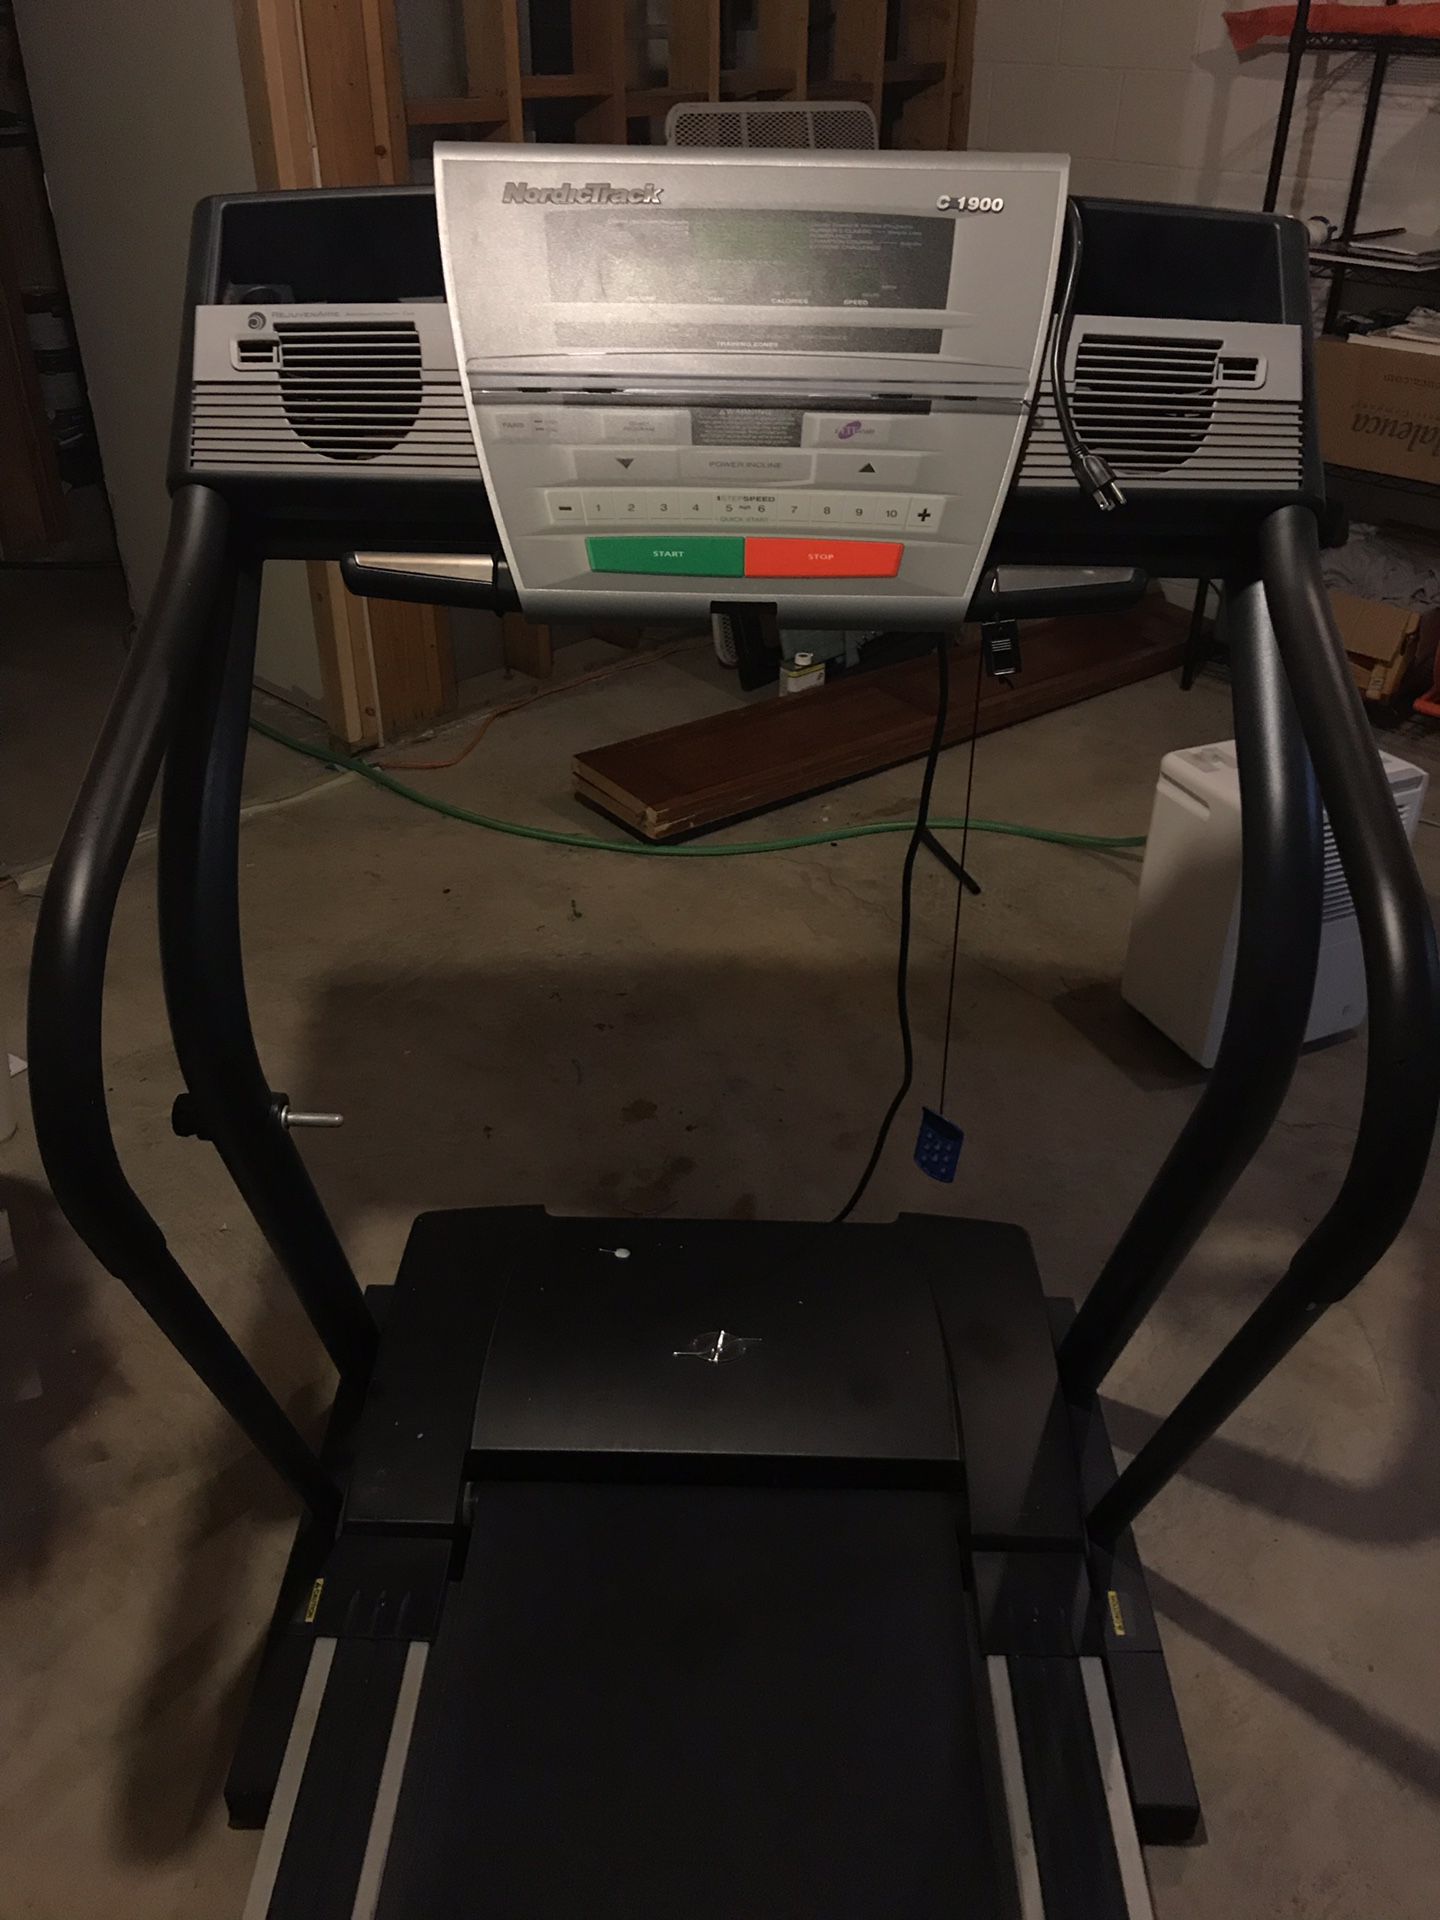 NordicTrack C 1900 Treadmill